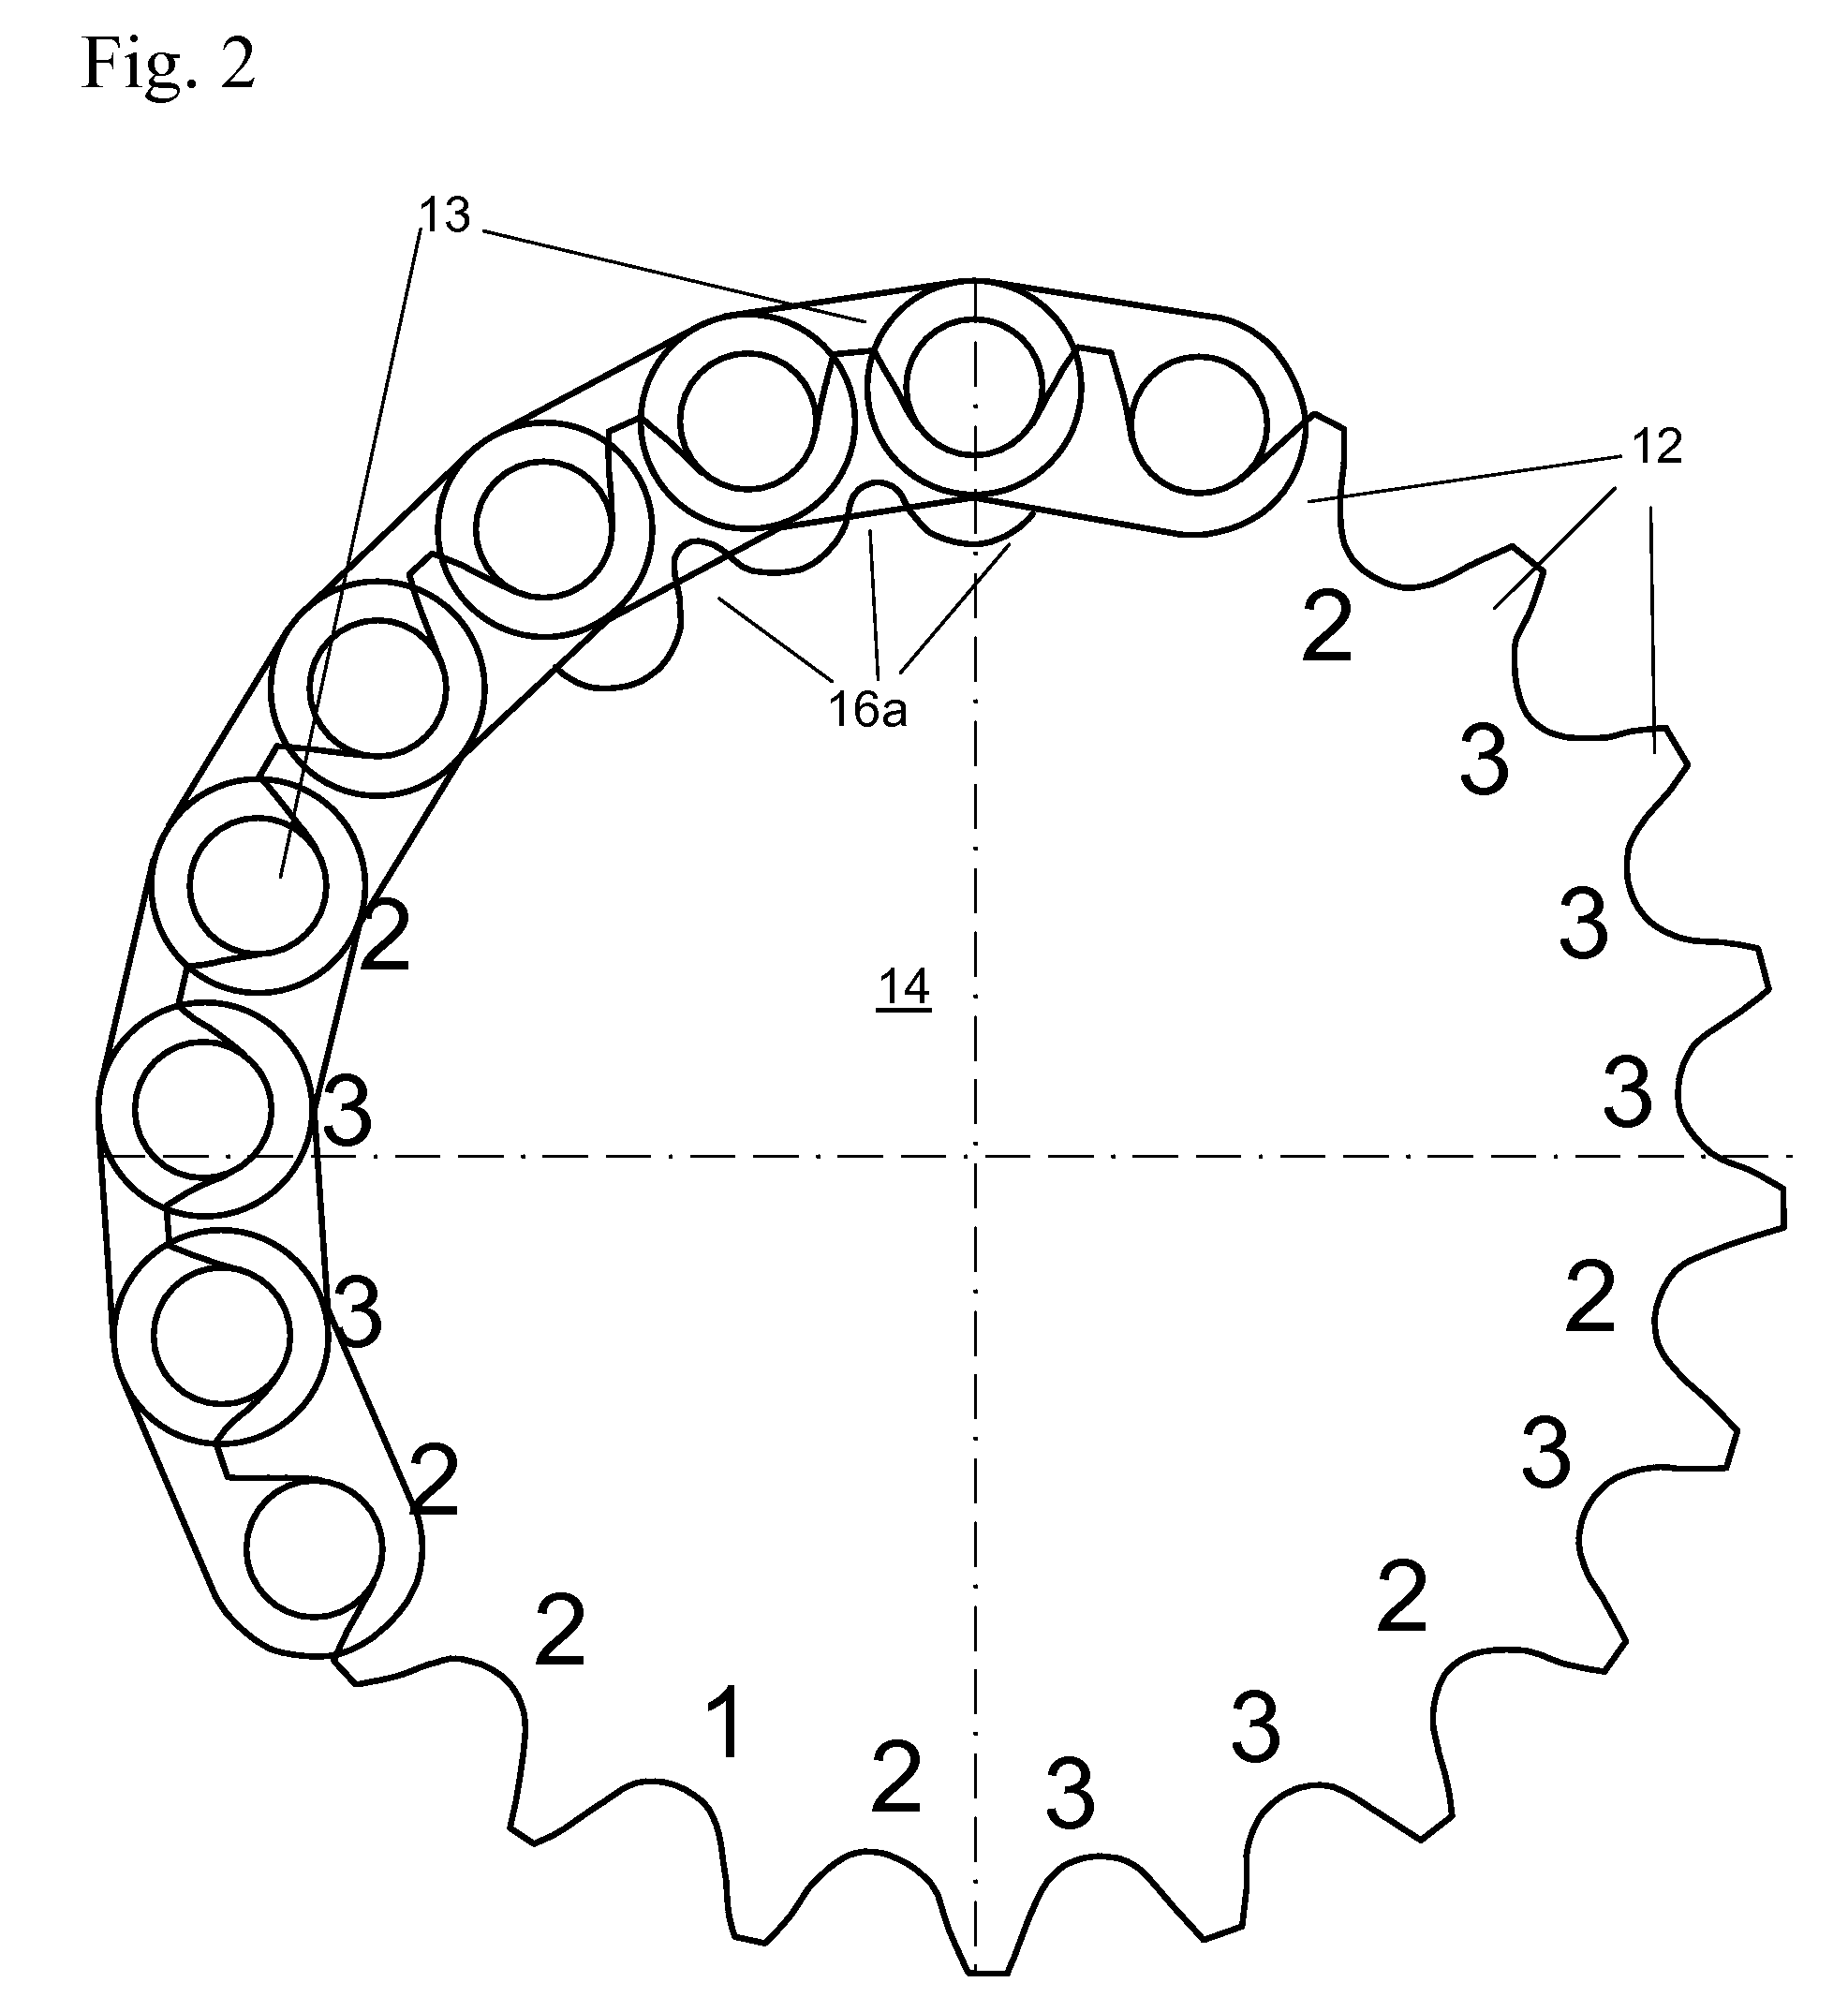 Random elastomer cushion rings for a chain sprocket